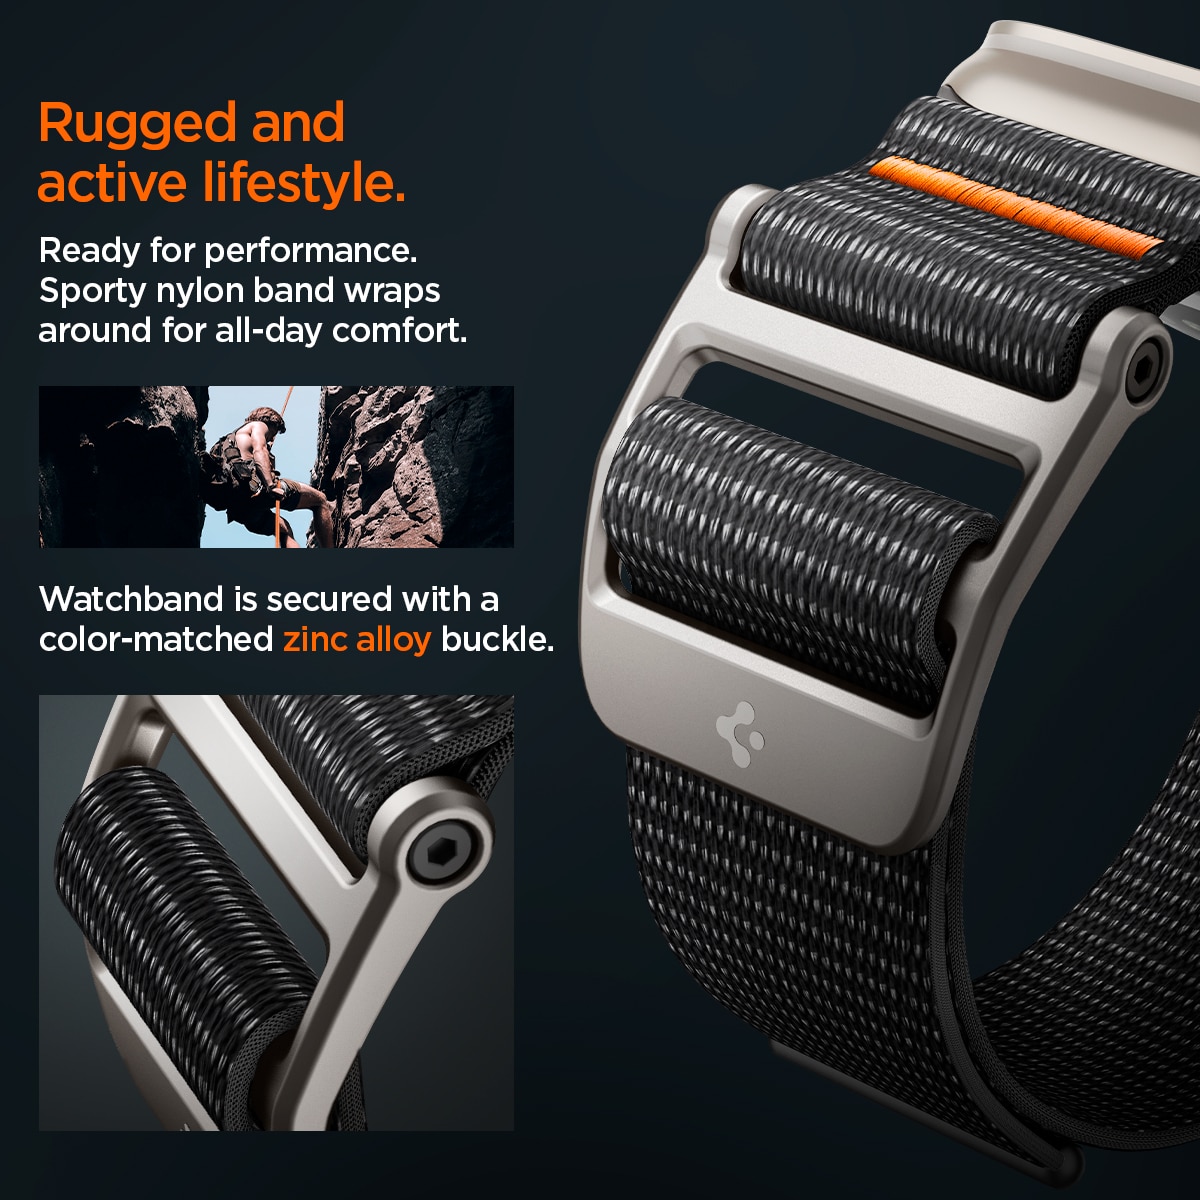 DuraPro Flex Ultra Apple Watch Ultra 49mm Black